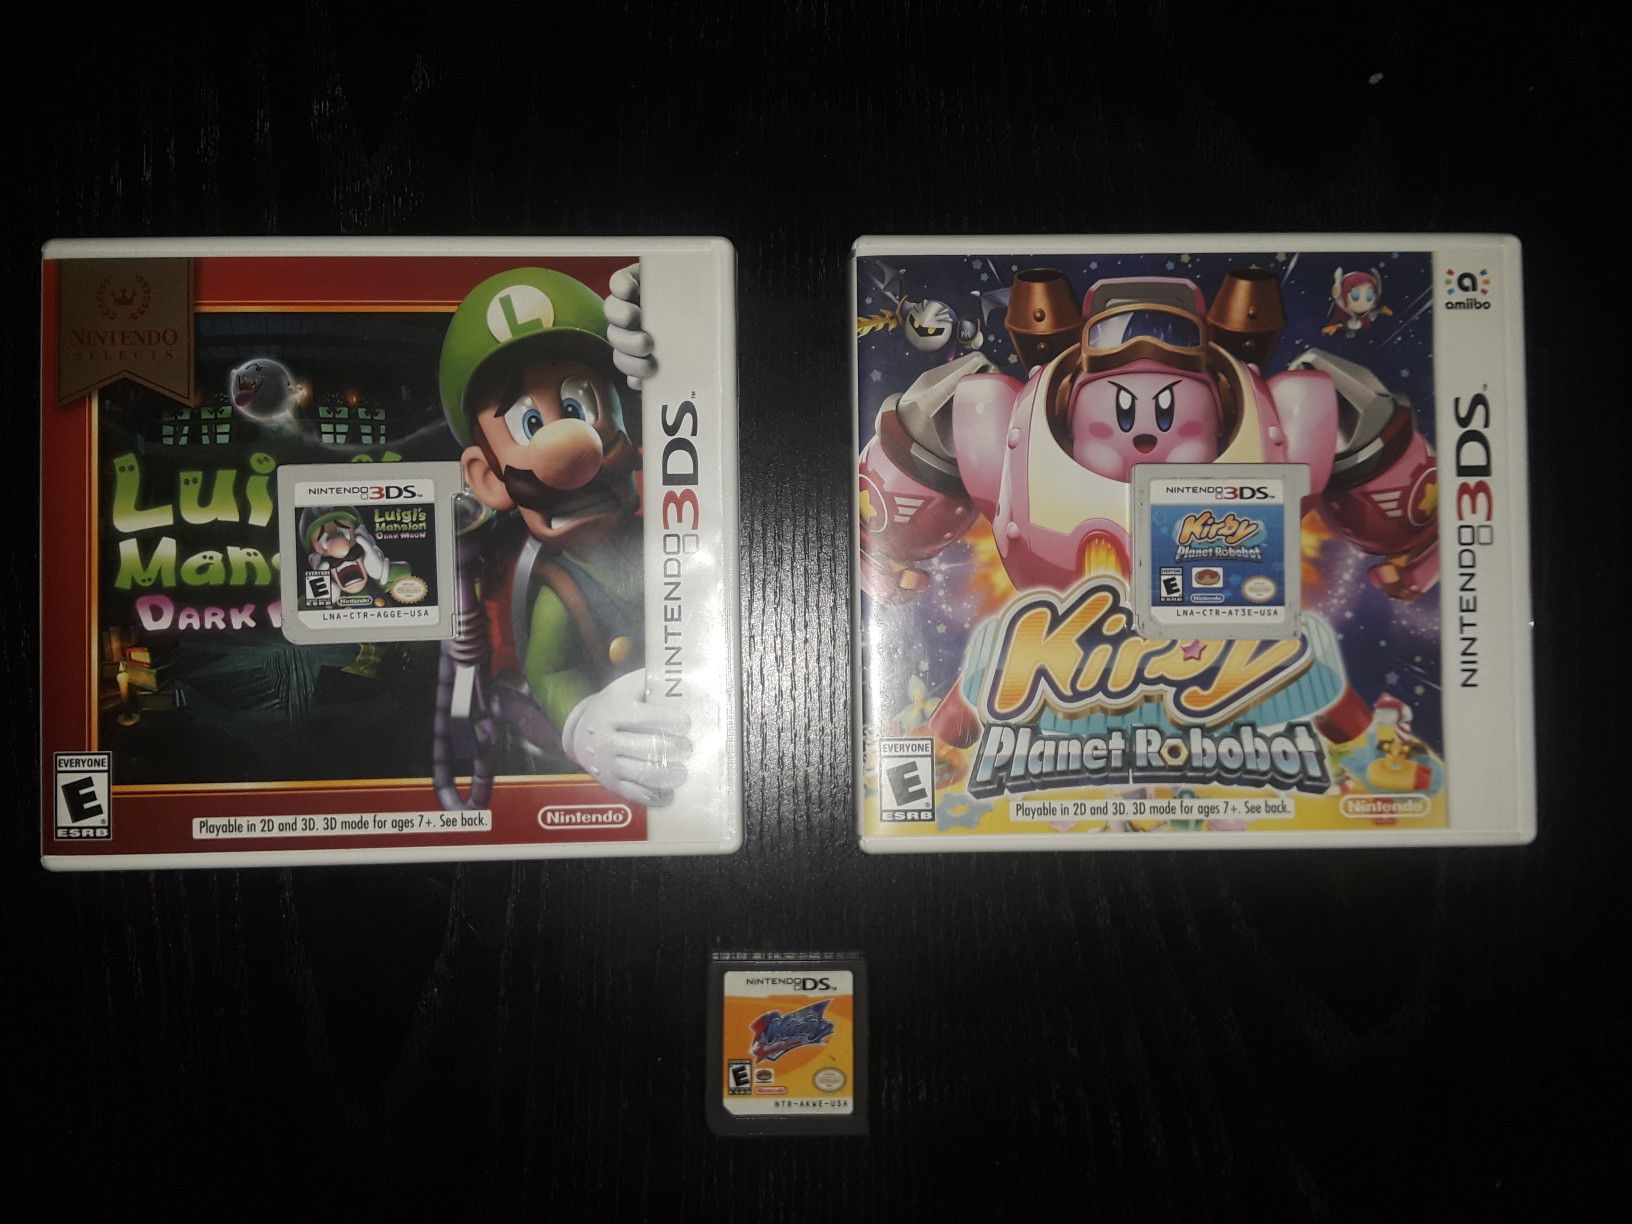 3 Nintendo 3ds games: Luigi's Mansion Dark Moon, Kirby Planet Robot, and Kirby Squek Squad.